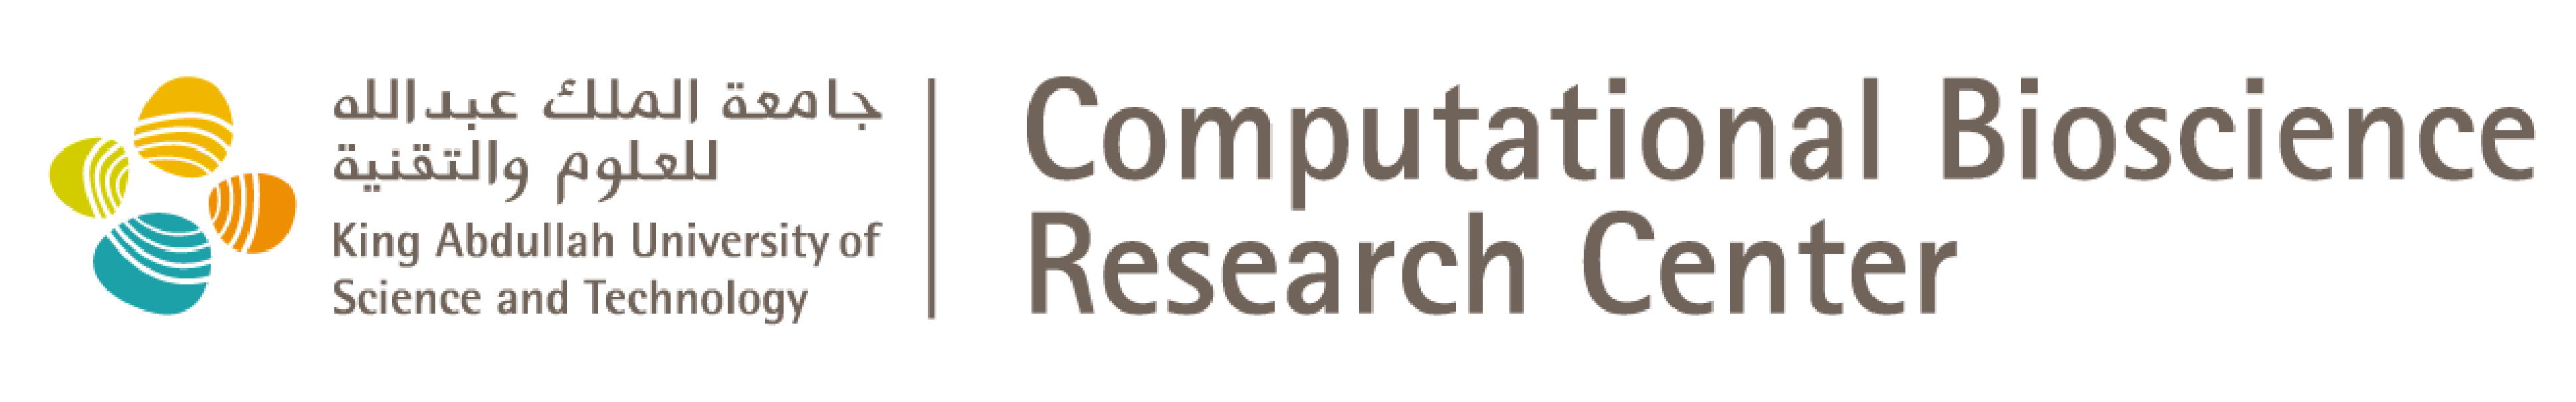 RE_CBRC_171002_ Computational Bioscience Research Center Logo Lockup_Colored